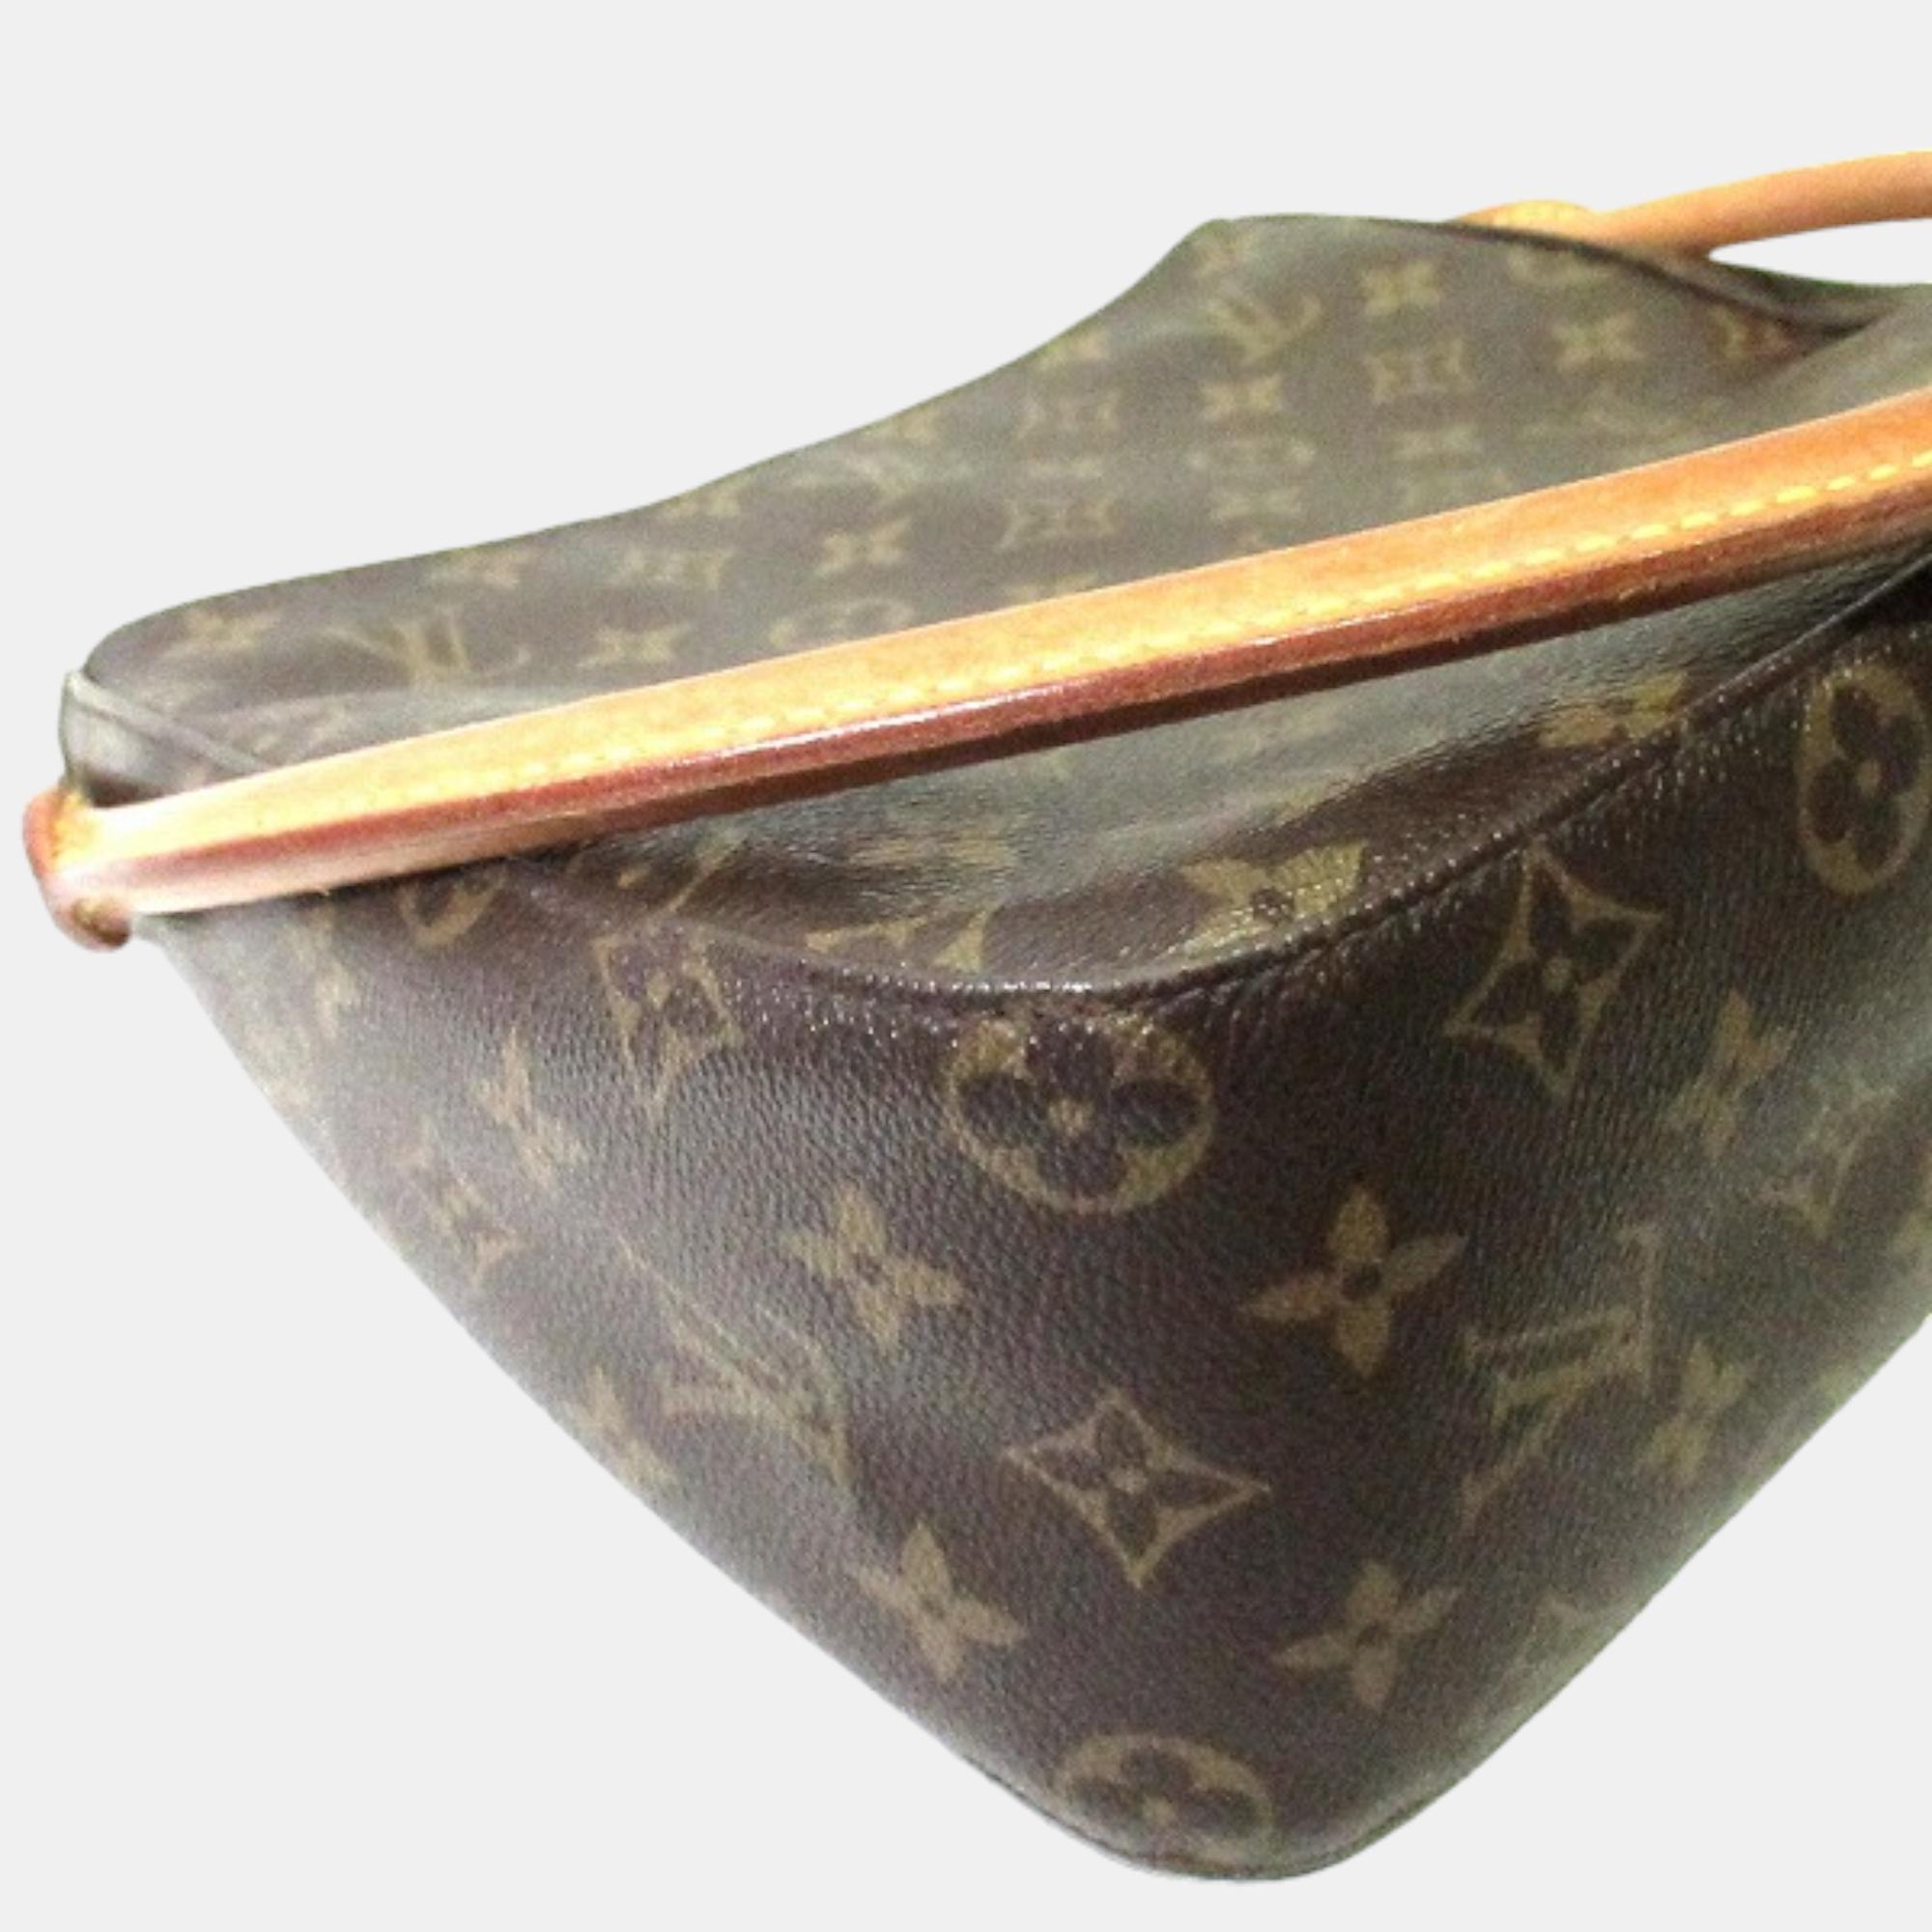 Louis Vuitton Brown Canvas Monogram Looping MM Handbag